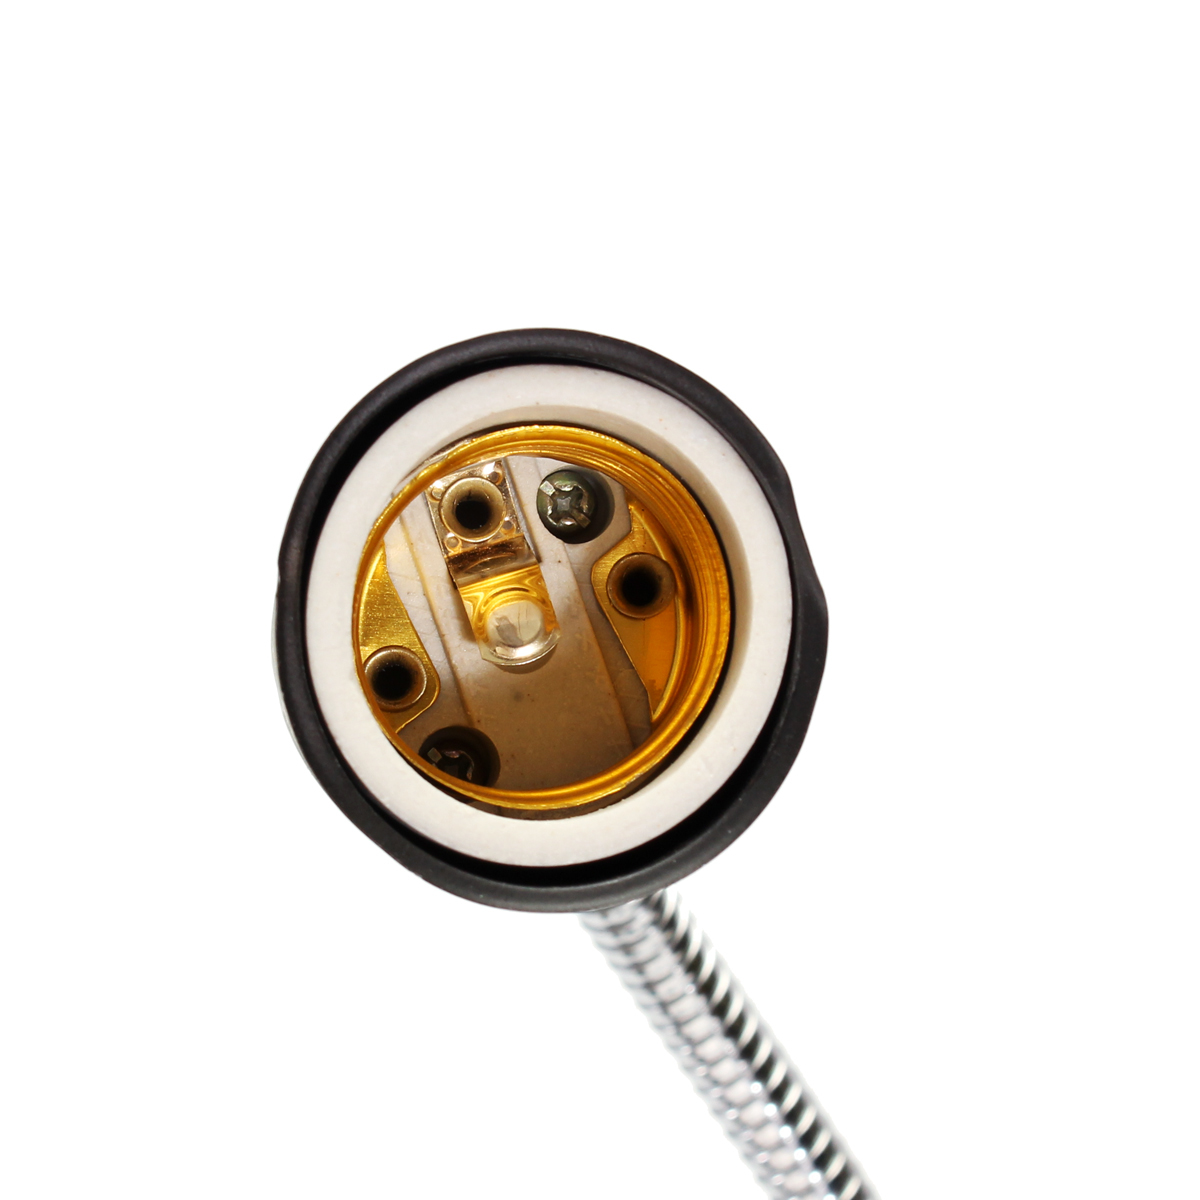 40CM E27 Flexible Pet Heat Light Bulb Adapter Lamp Holder Socket with Clip Dimming Switch EU US Plug